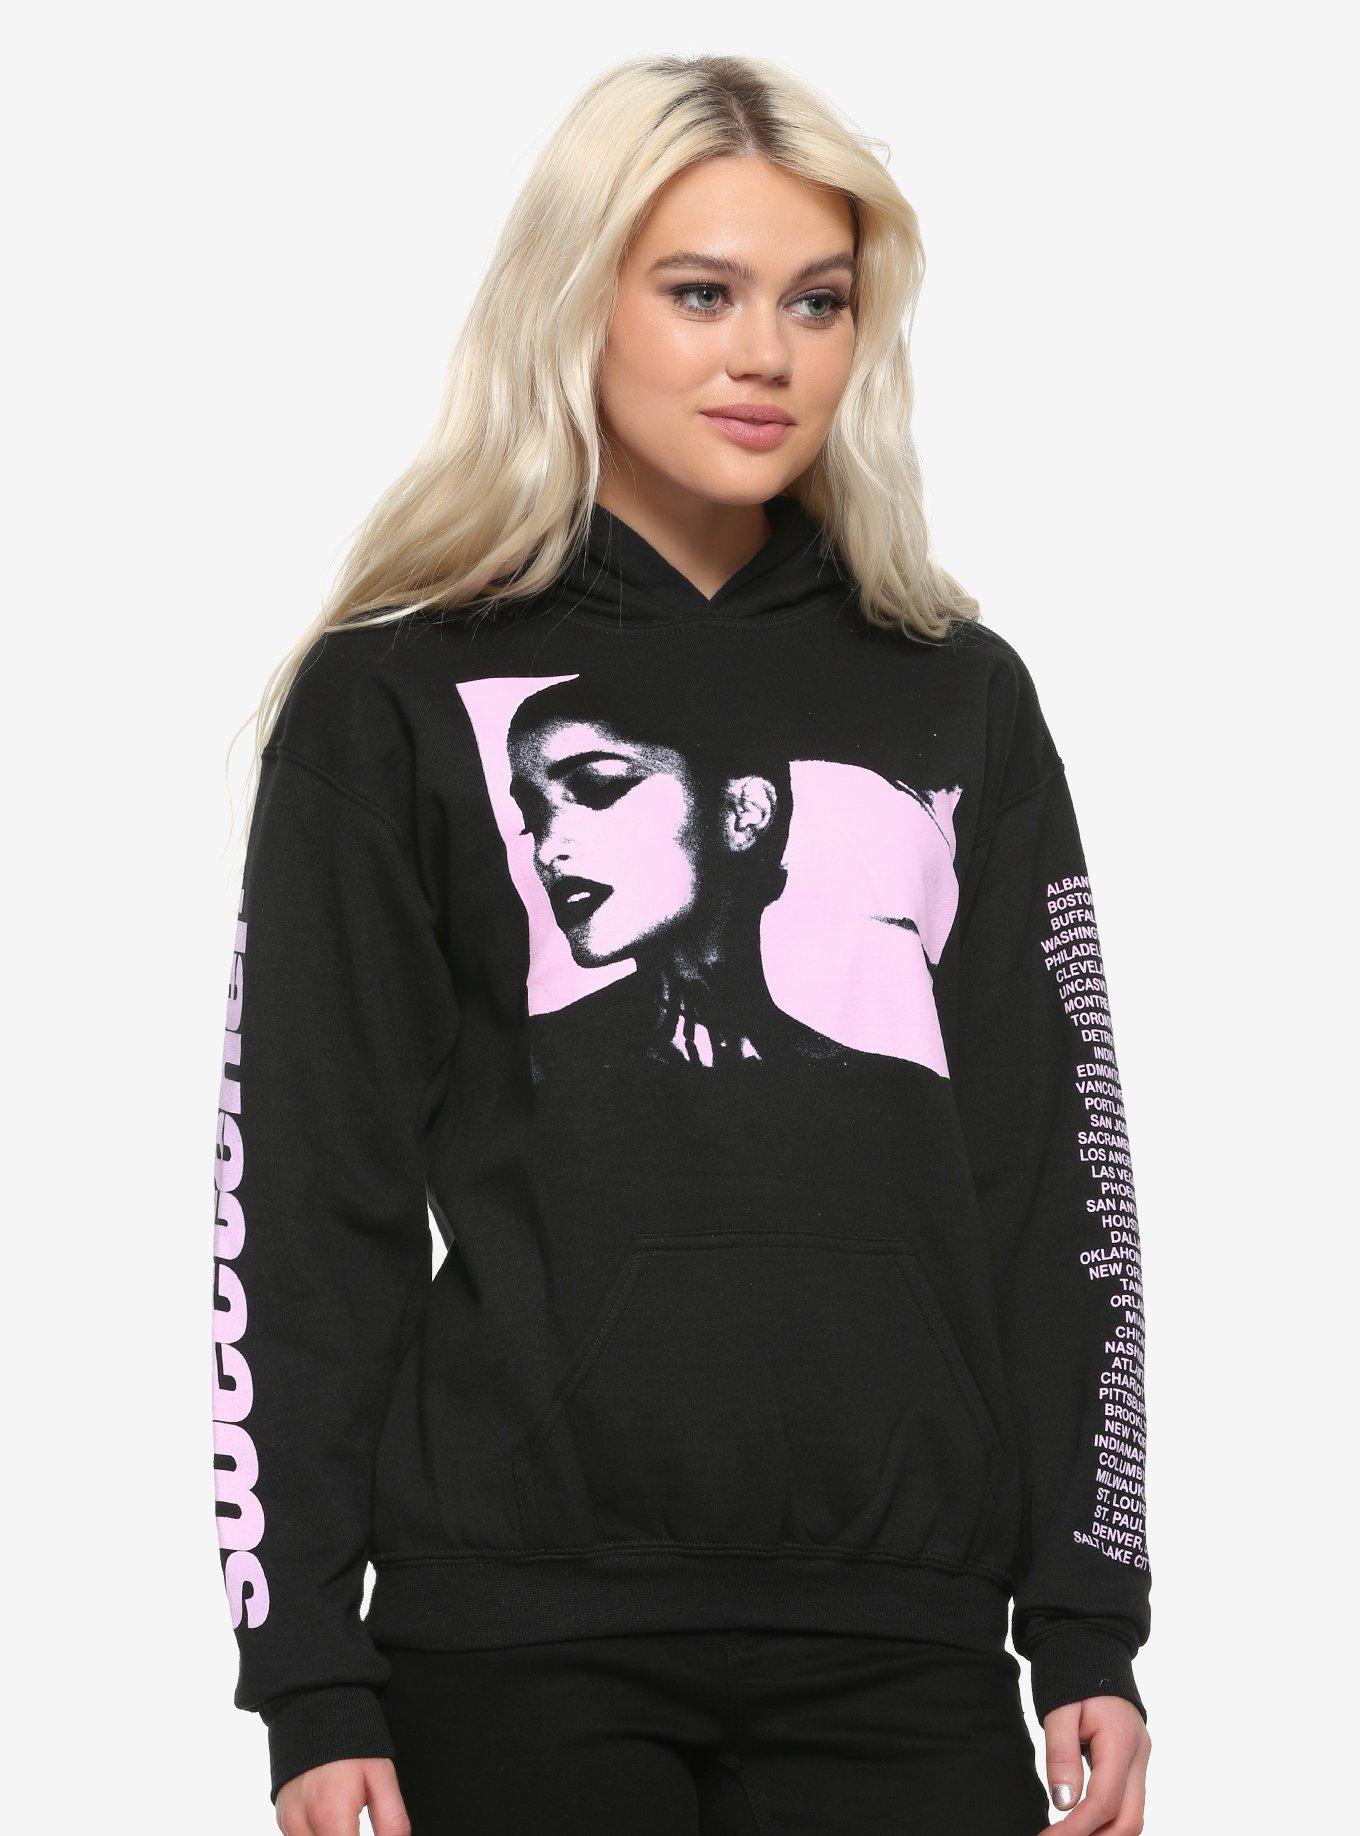 Ariana Grande Sweetener Tour Hoodie Black Pullover Sweatshirt Adult Size  Large?